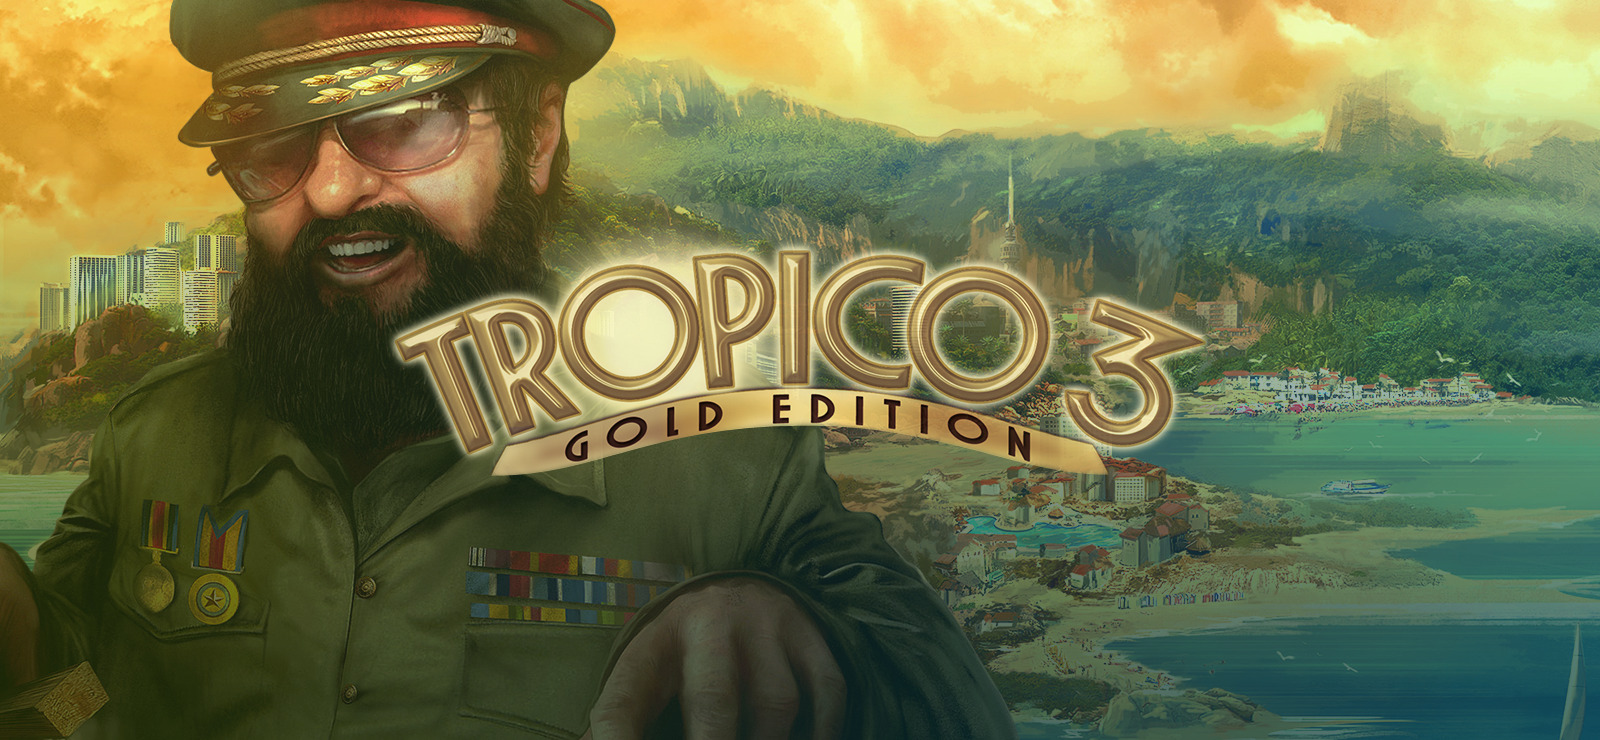 tropico 3 download free